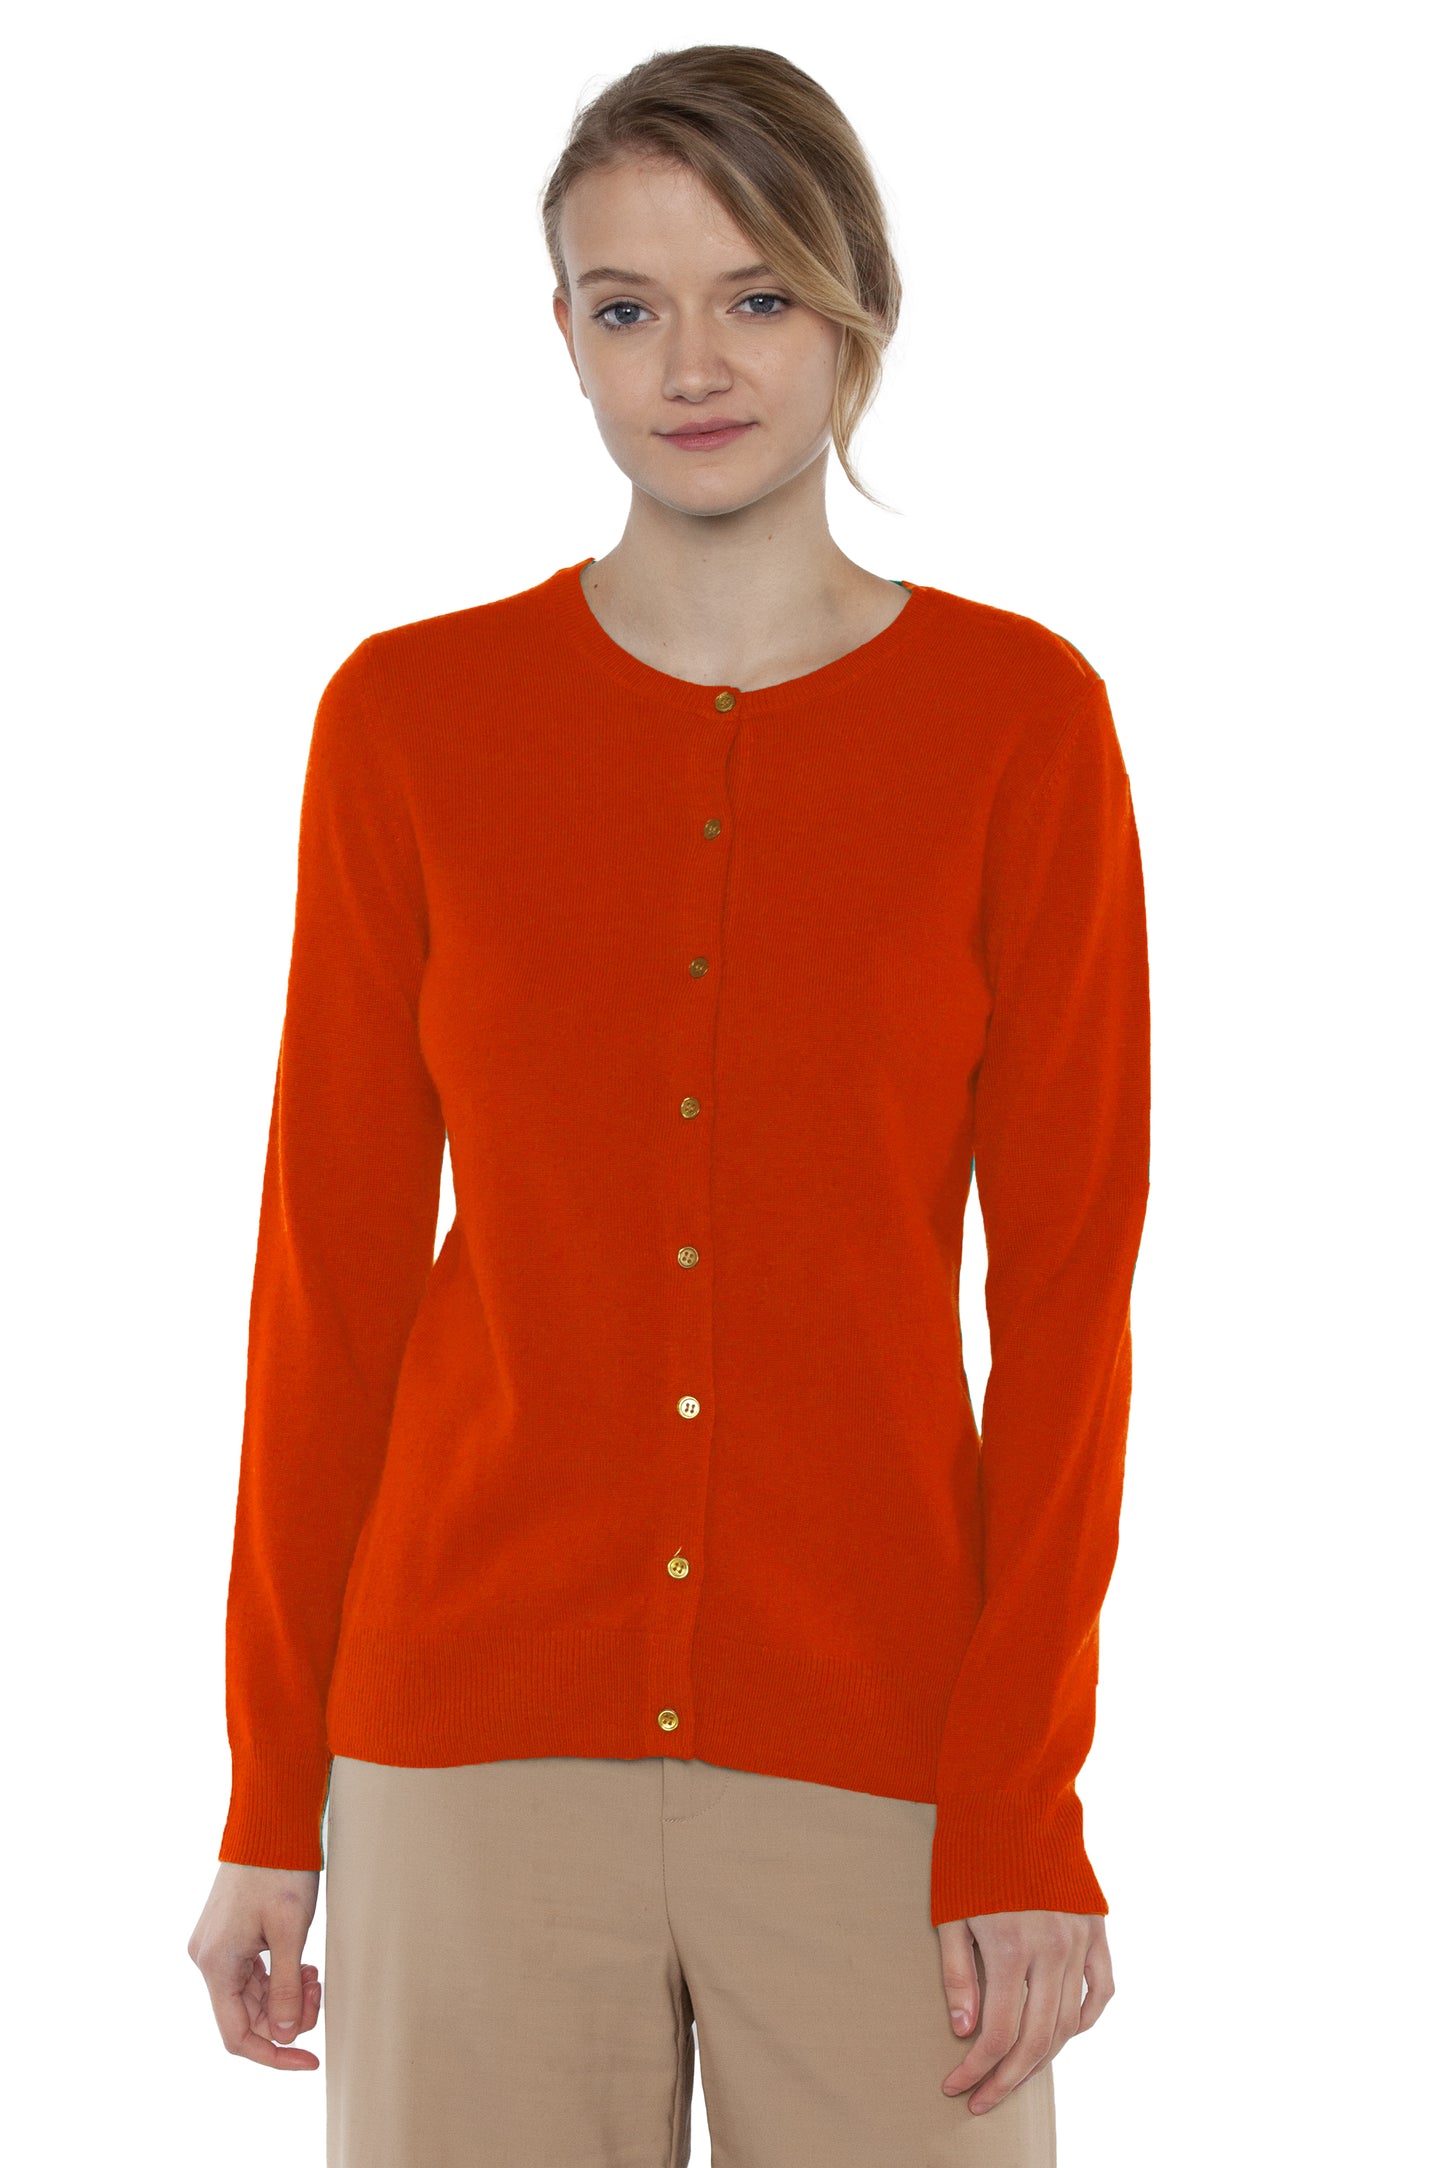 JENNIE LIU Women's 100% Cashmere Button Front Long Sleeve Crewneck Cardigan Sweater (1575)